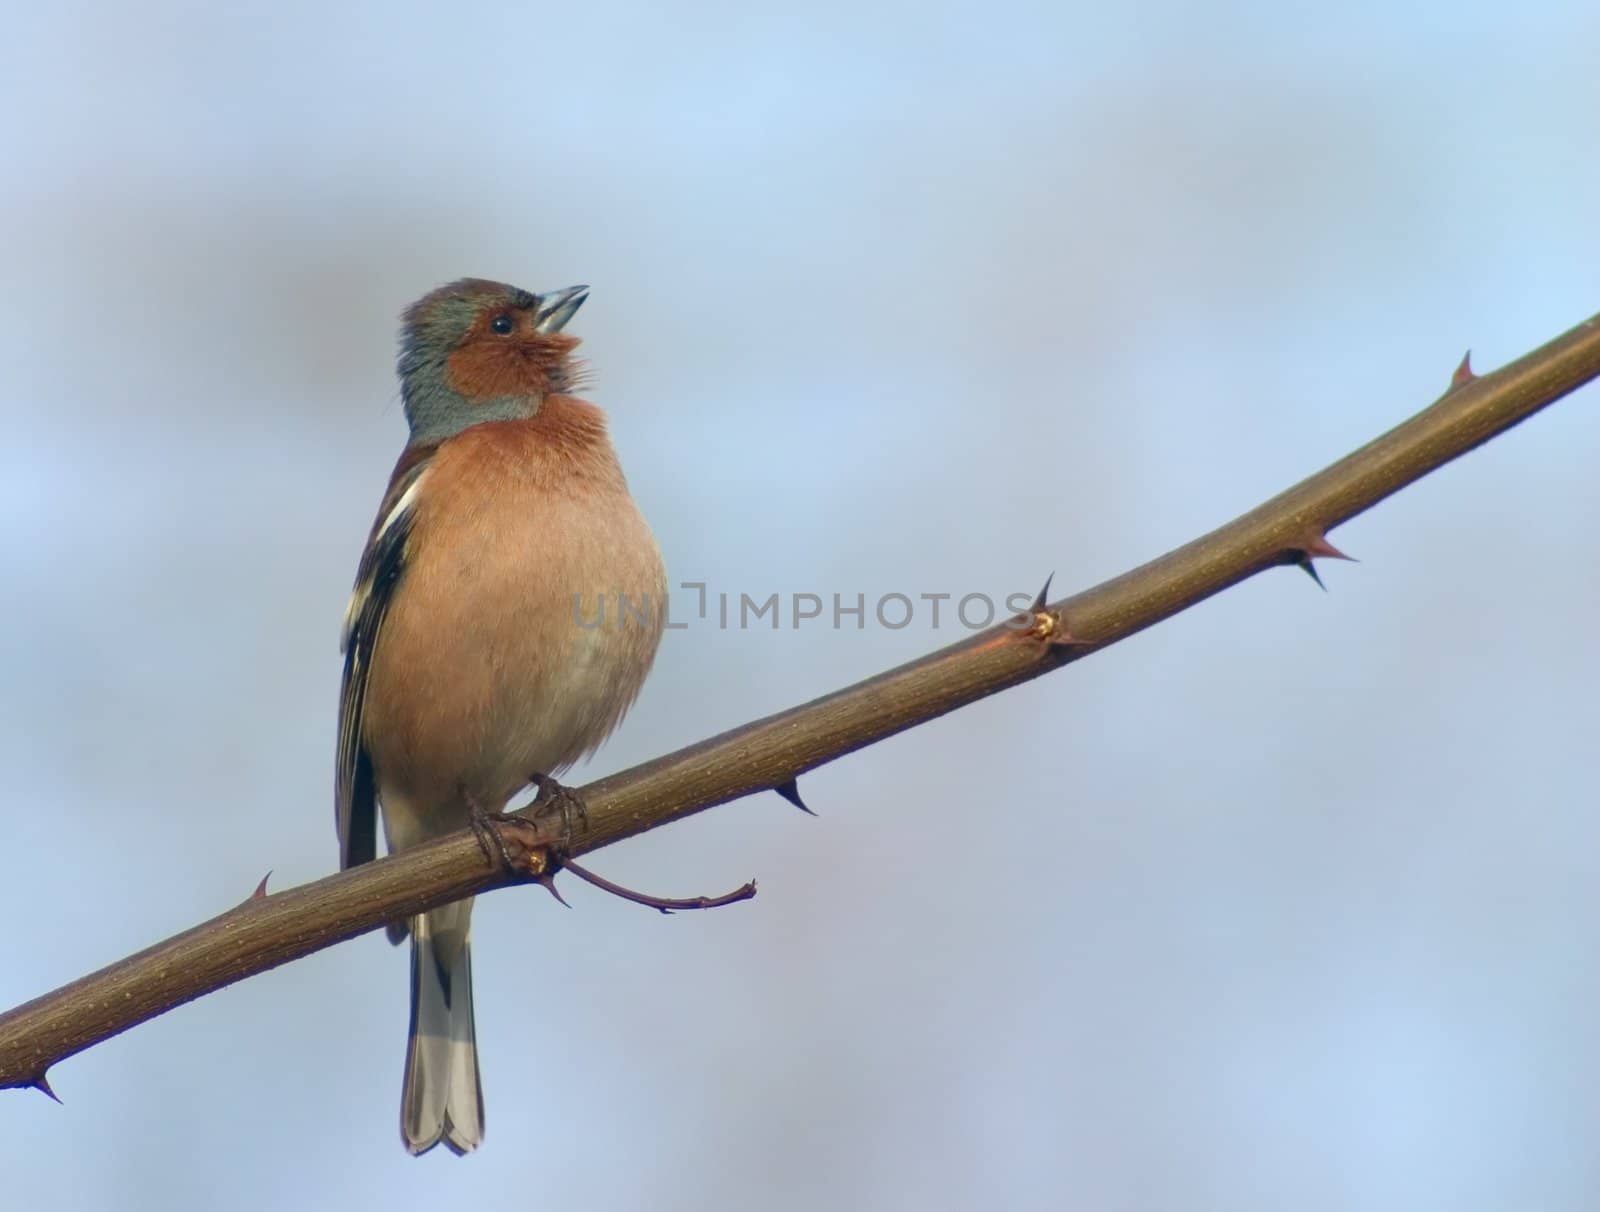 chaffinch bird singing on a spiny twig